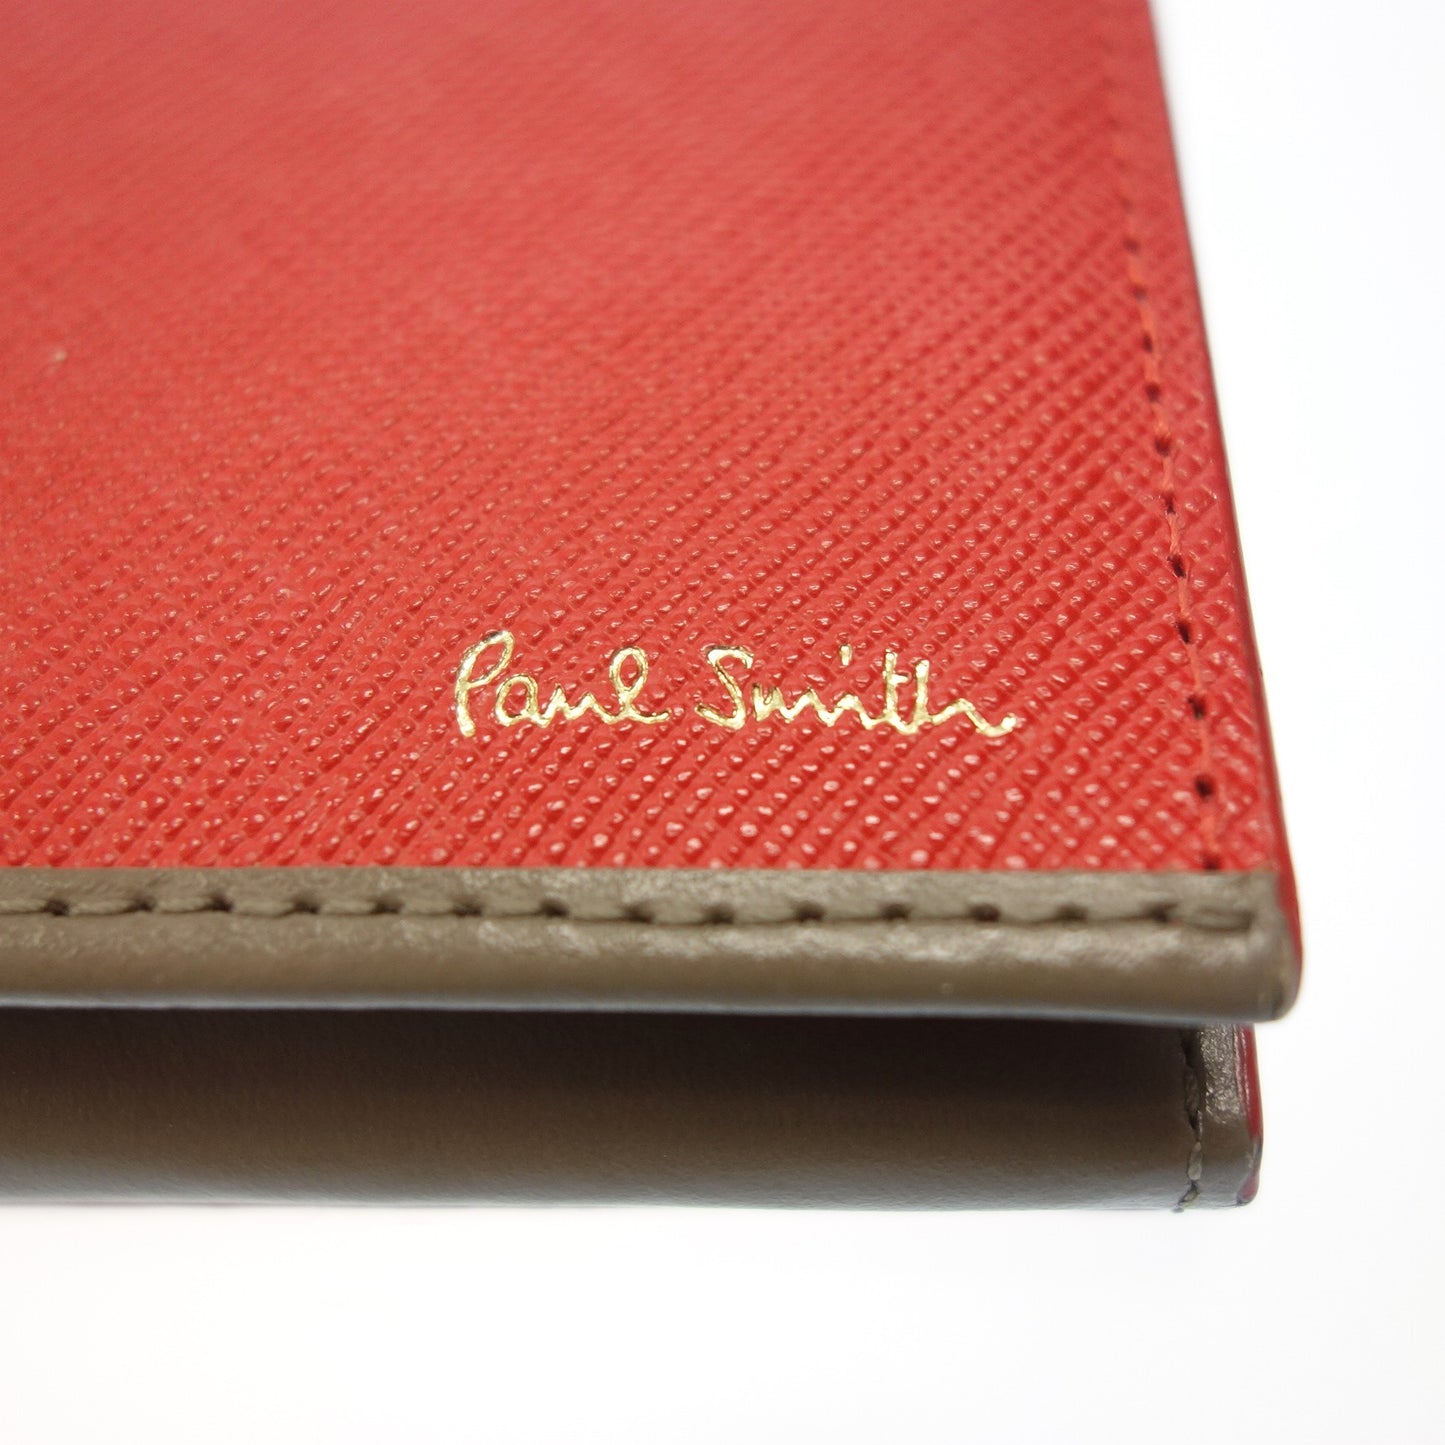 Paul Smith 双折长钱包 Saffiano P105 红色 带盒子 Paul Smith [AFI18] [二手] 